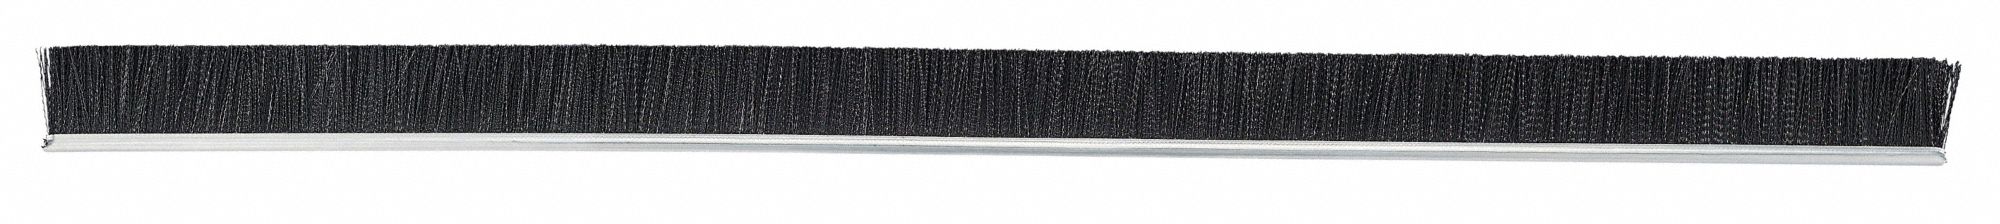 0.008 Bristle Diameter 36 Overall Length Tanis Brush MB252236 1//8 Stainless Steel Backed Strip Brush with Crimped Black Nylon Bristles 1 Trim Length